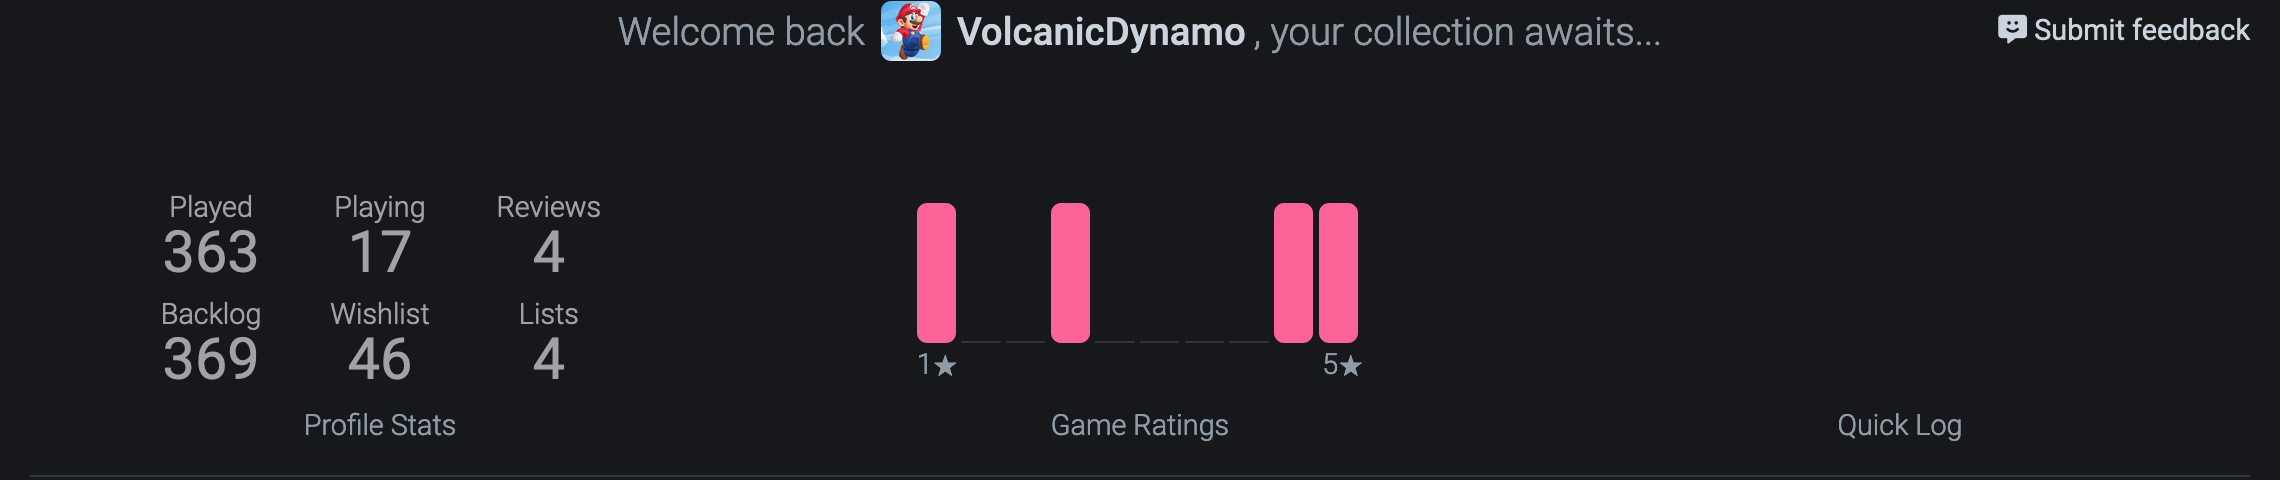 VolcanicDynamo's Backloggd stats. Played: 363. Backlog: 369.